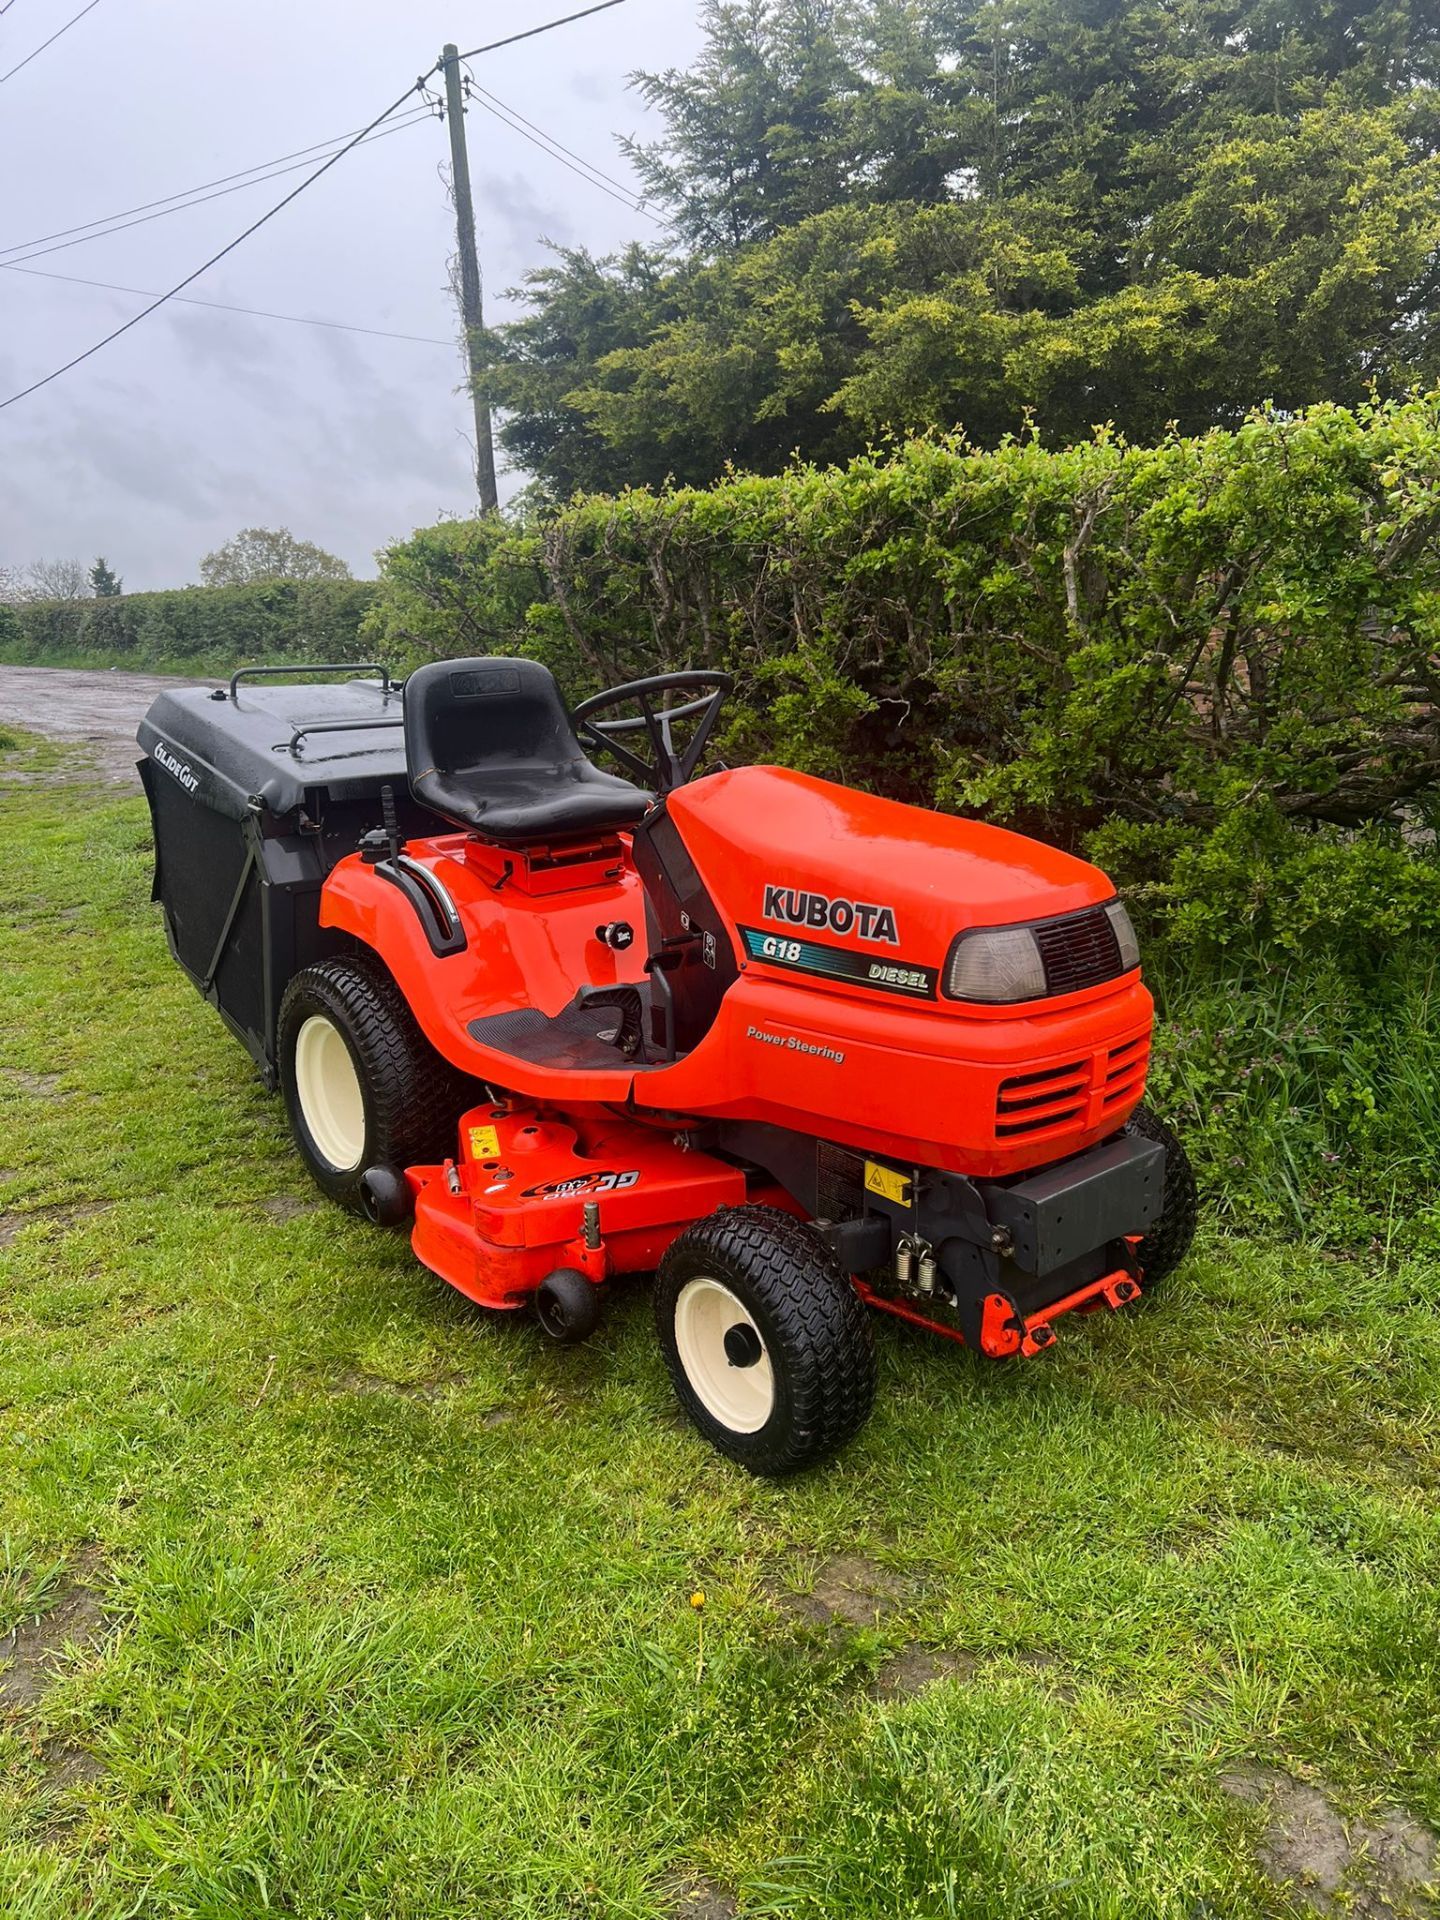 Kubota g18 ride on lawn mower (mint condition) *PLUS VAT* - Image 3 of 26